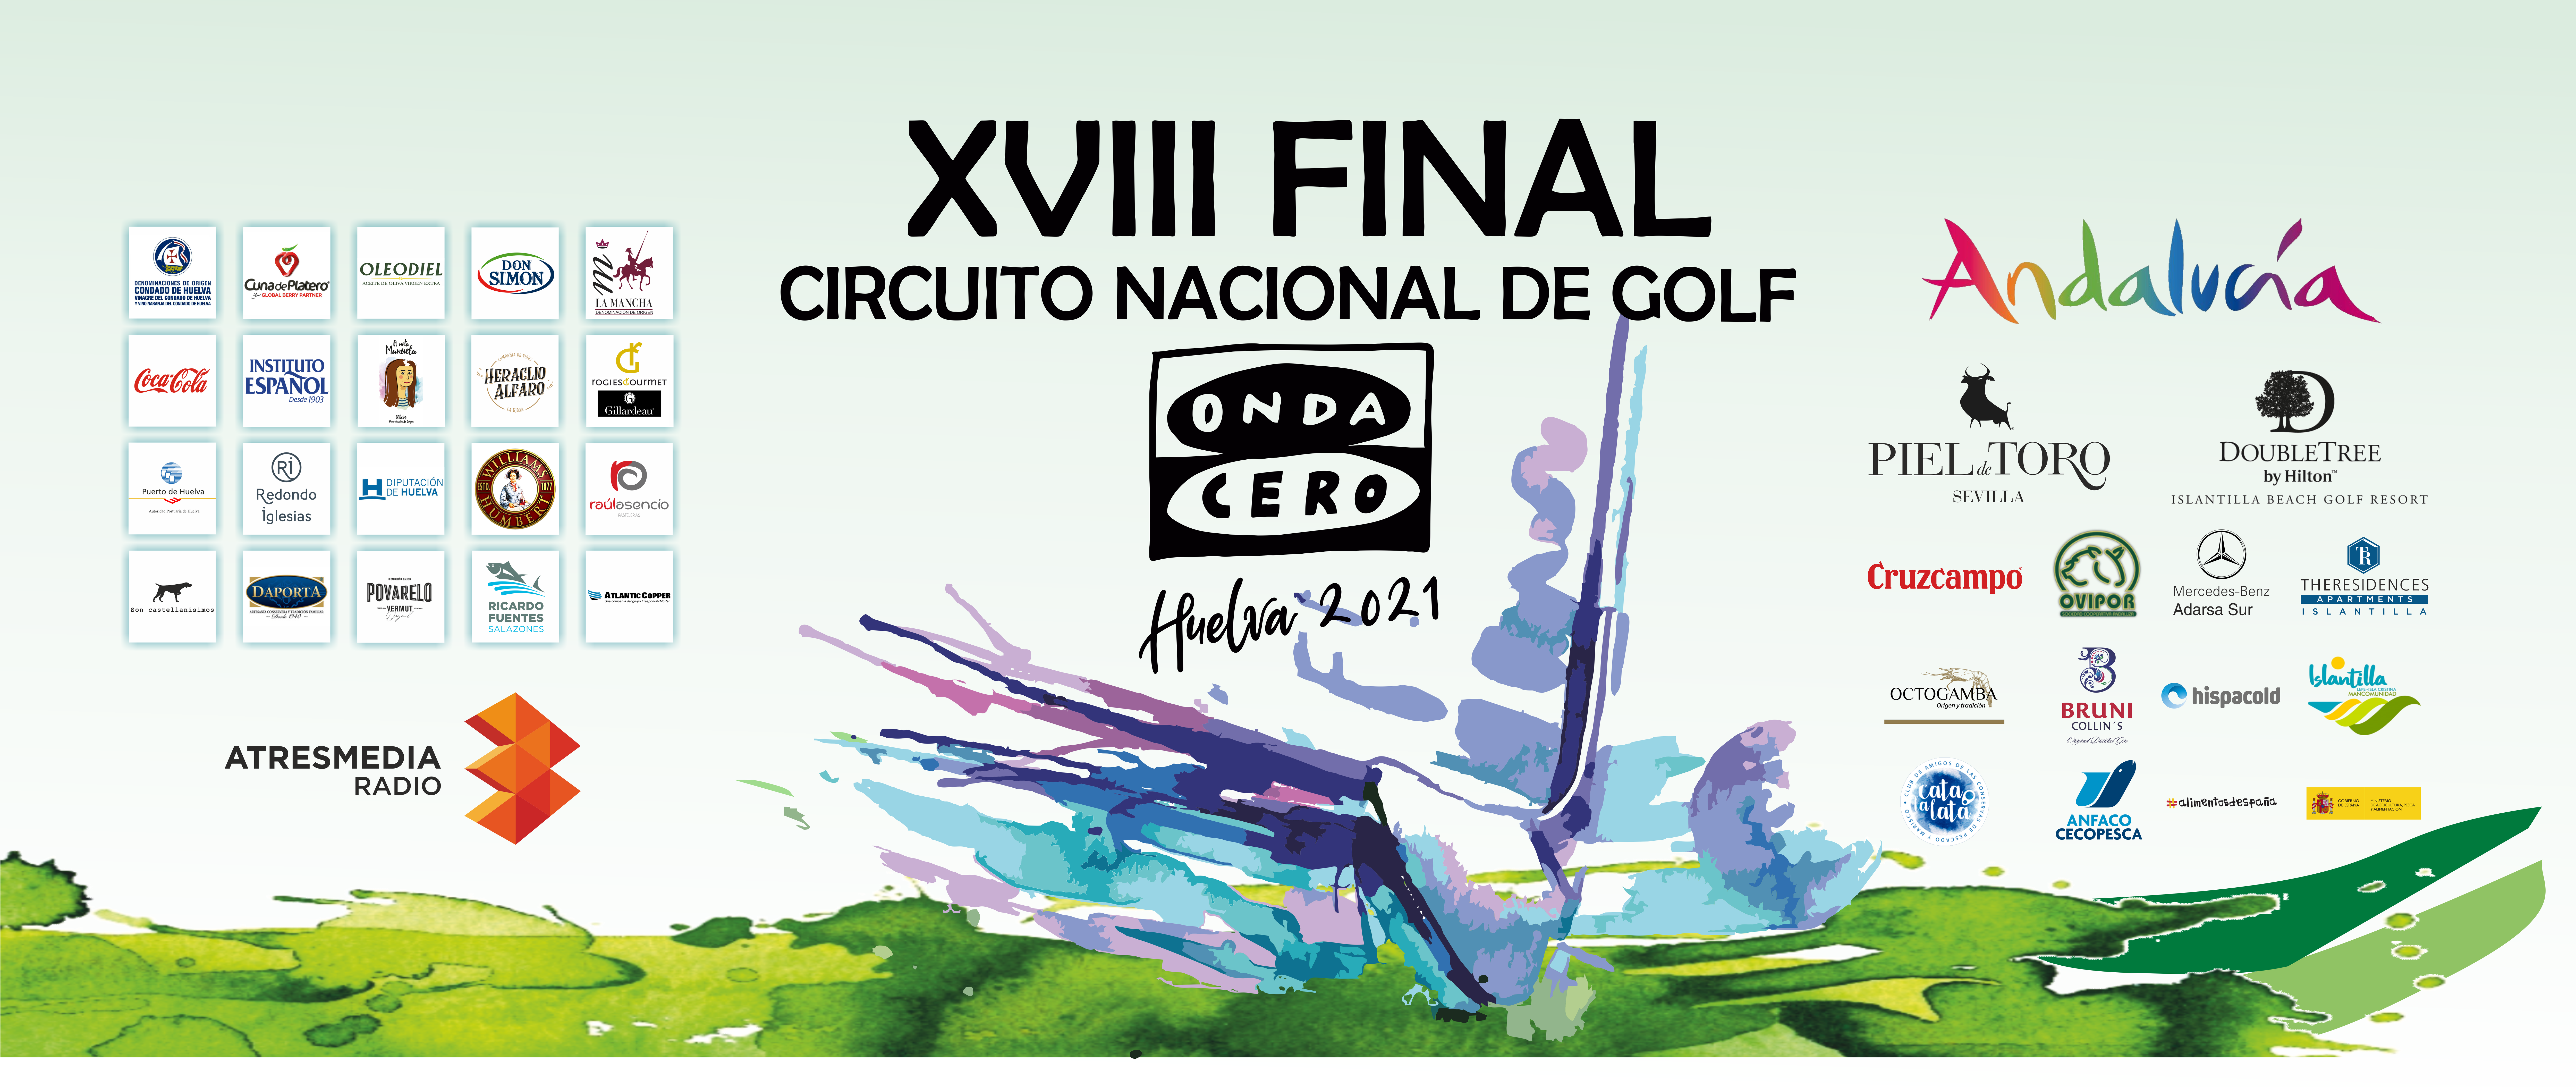 XVIII Final de Golf Onda Cero 